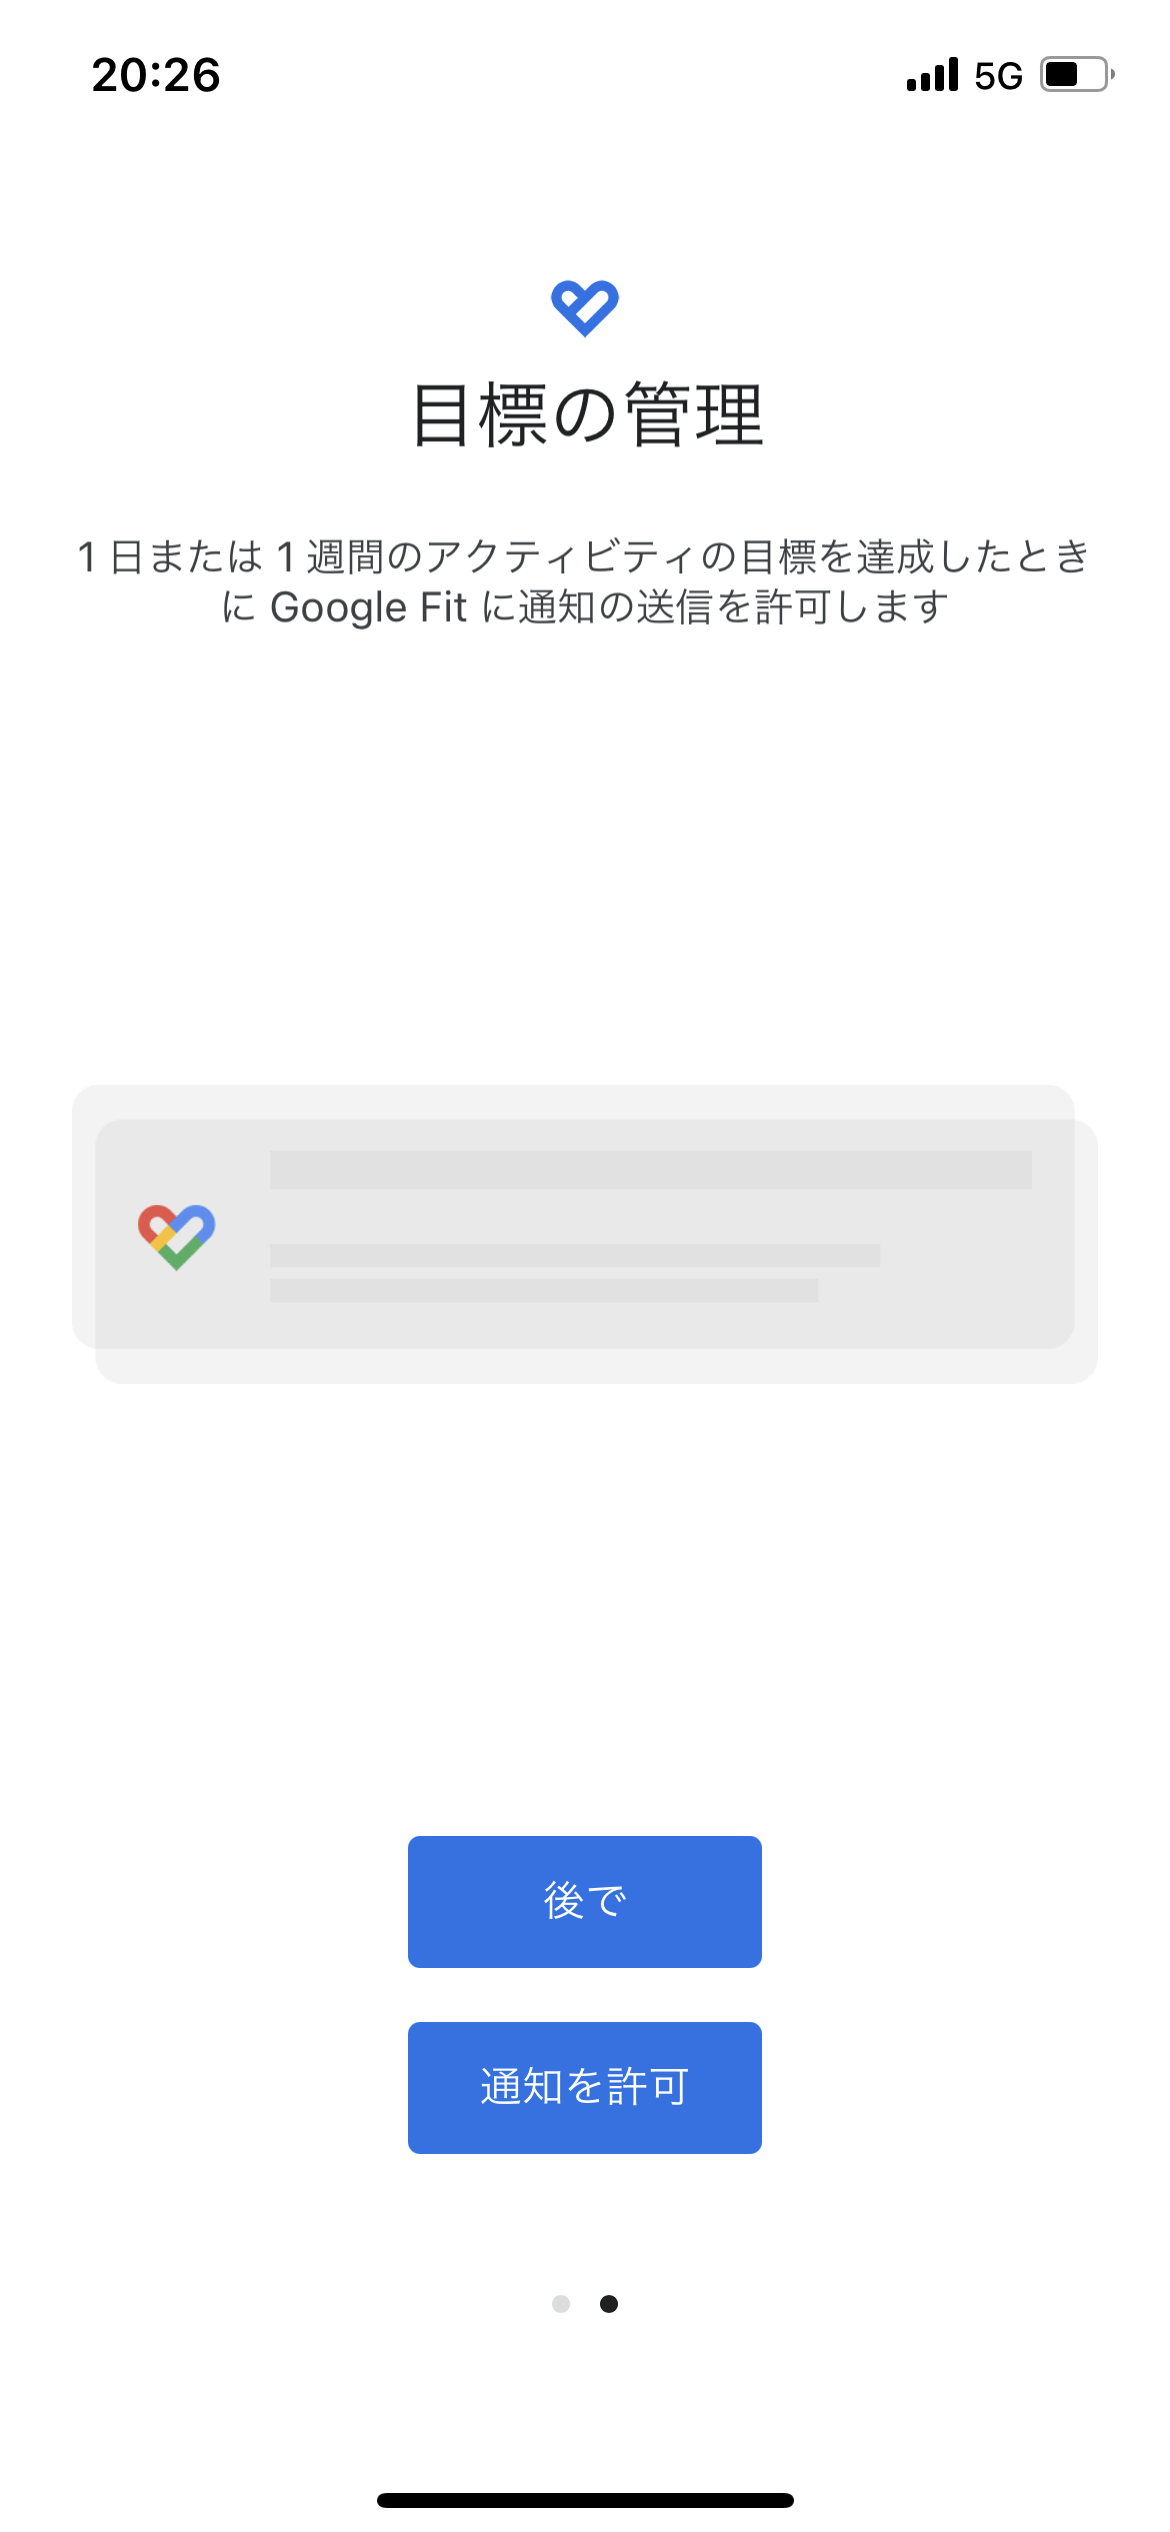 Google Fit オンボーディング screen